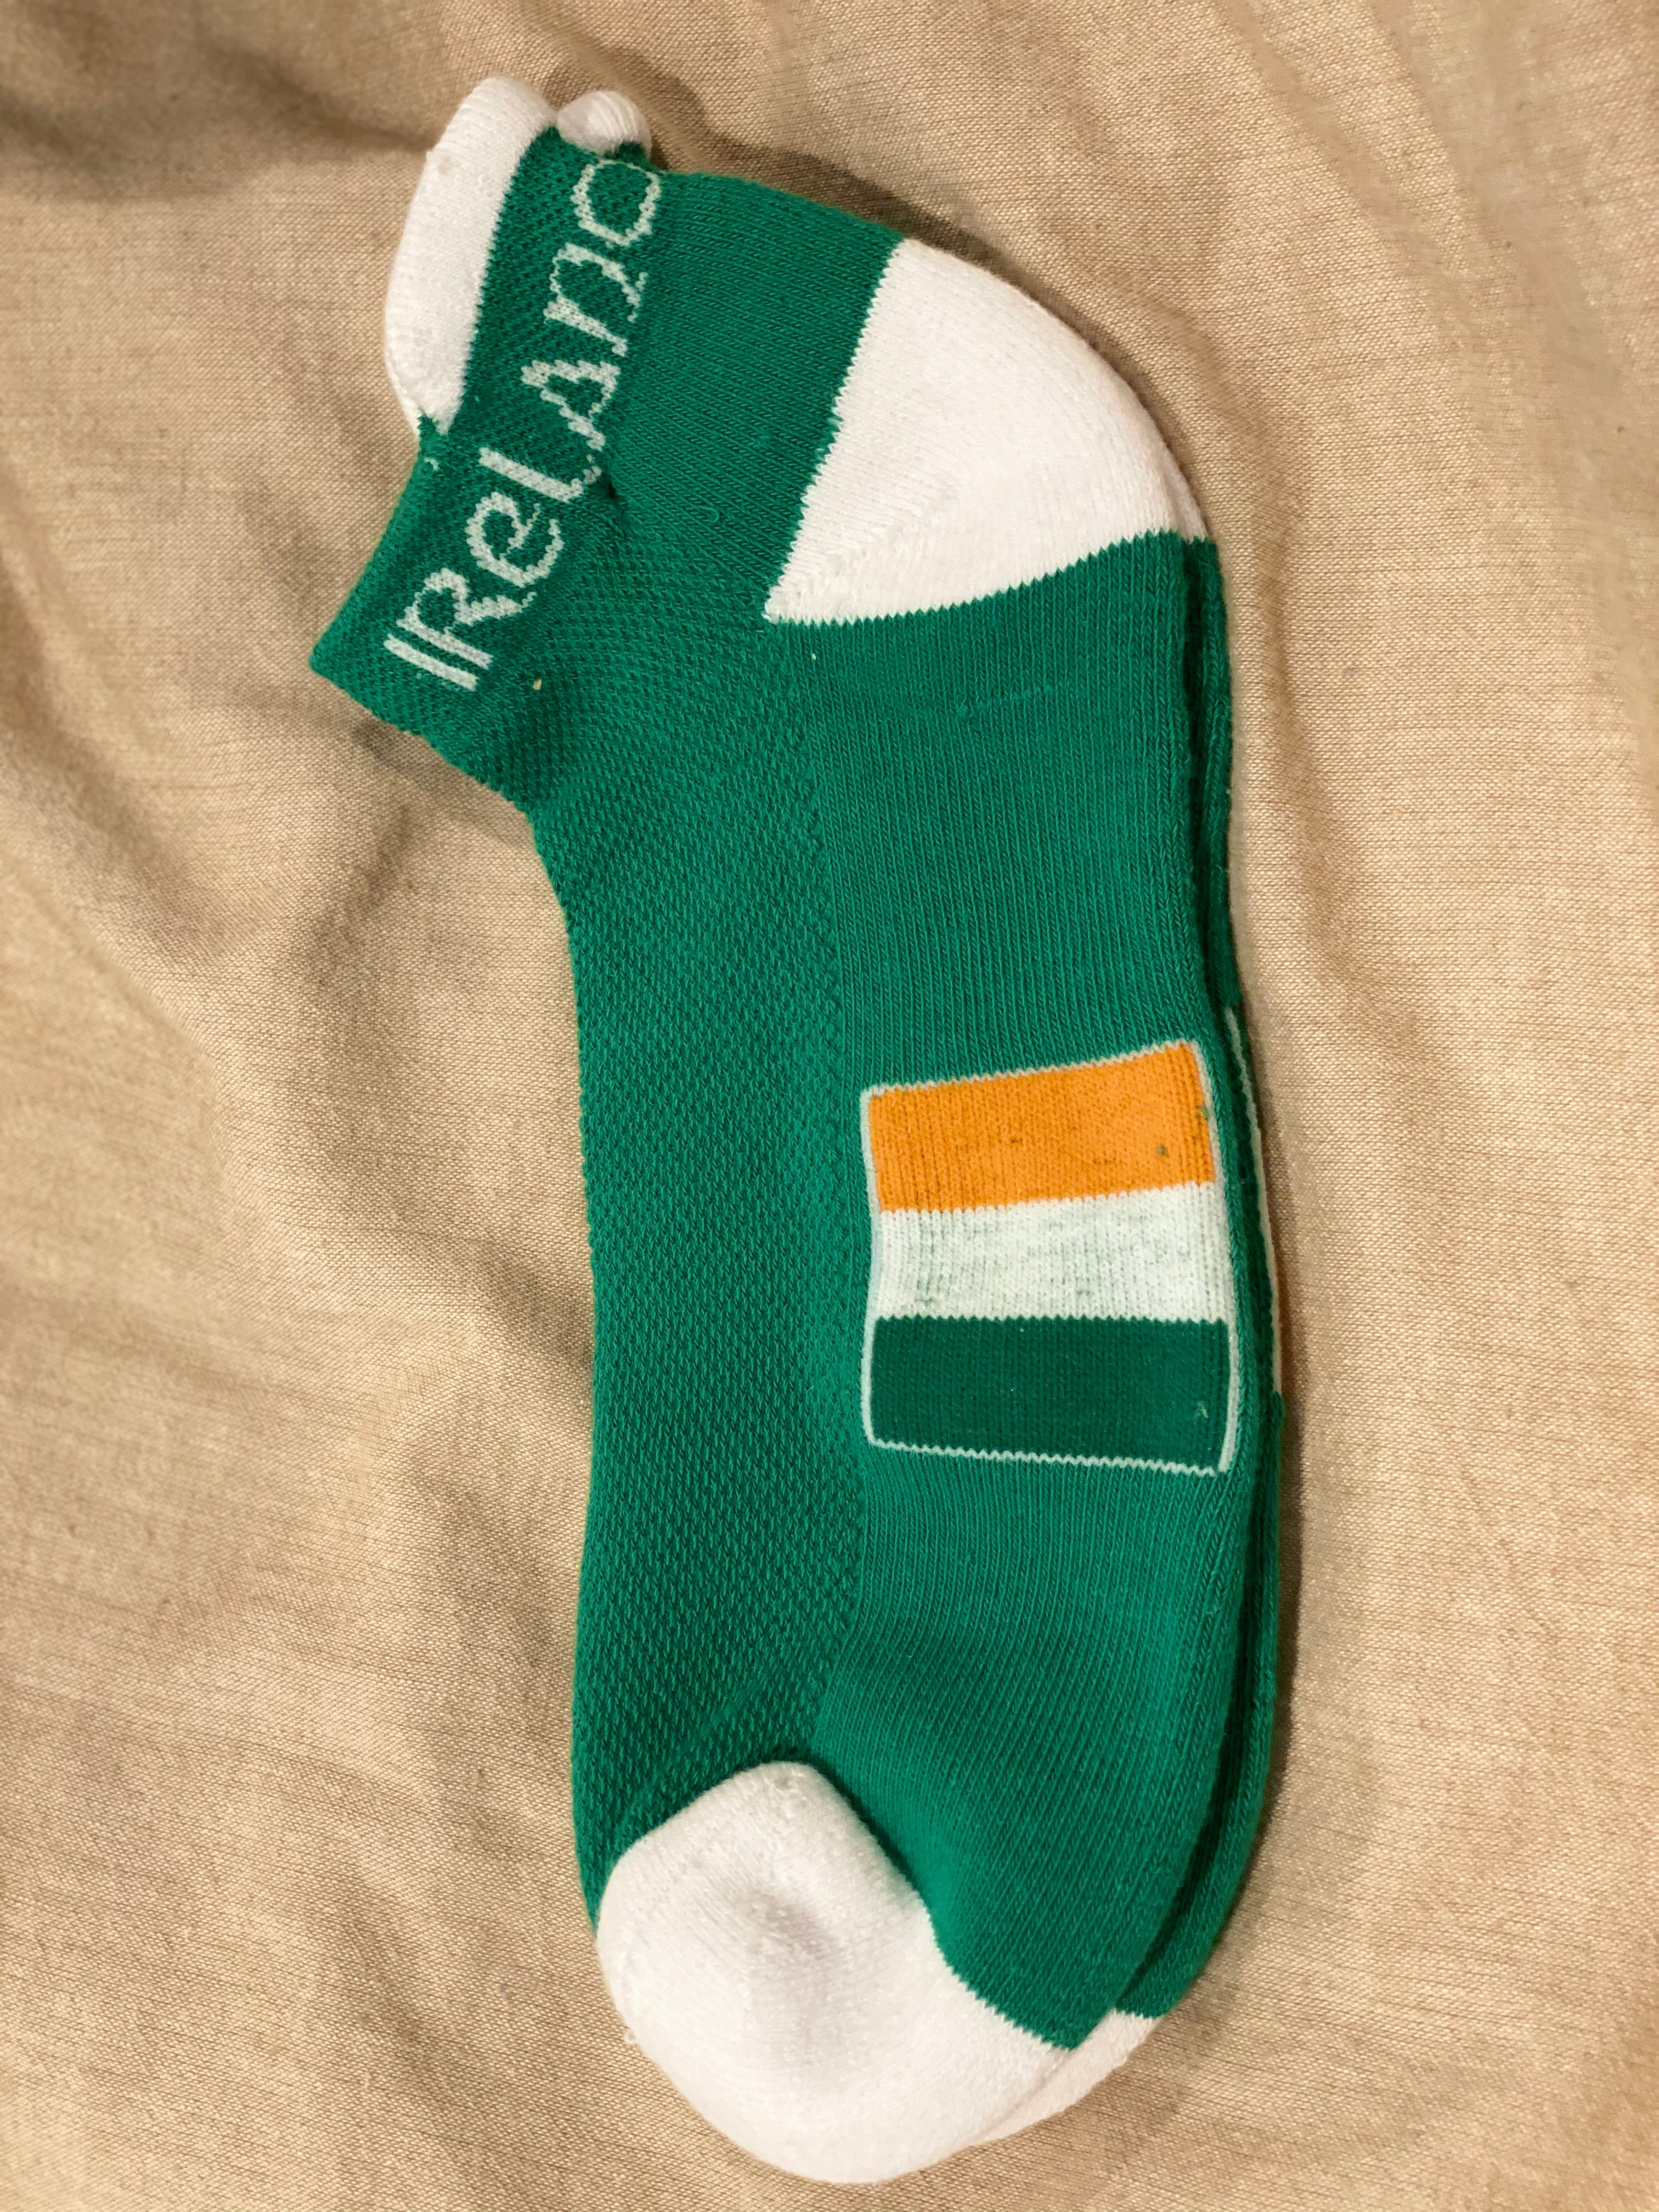 Ireland low cut socks